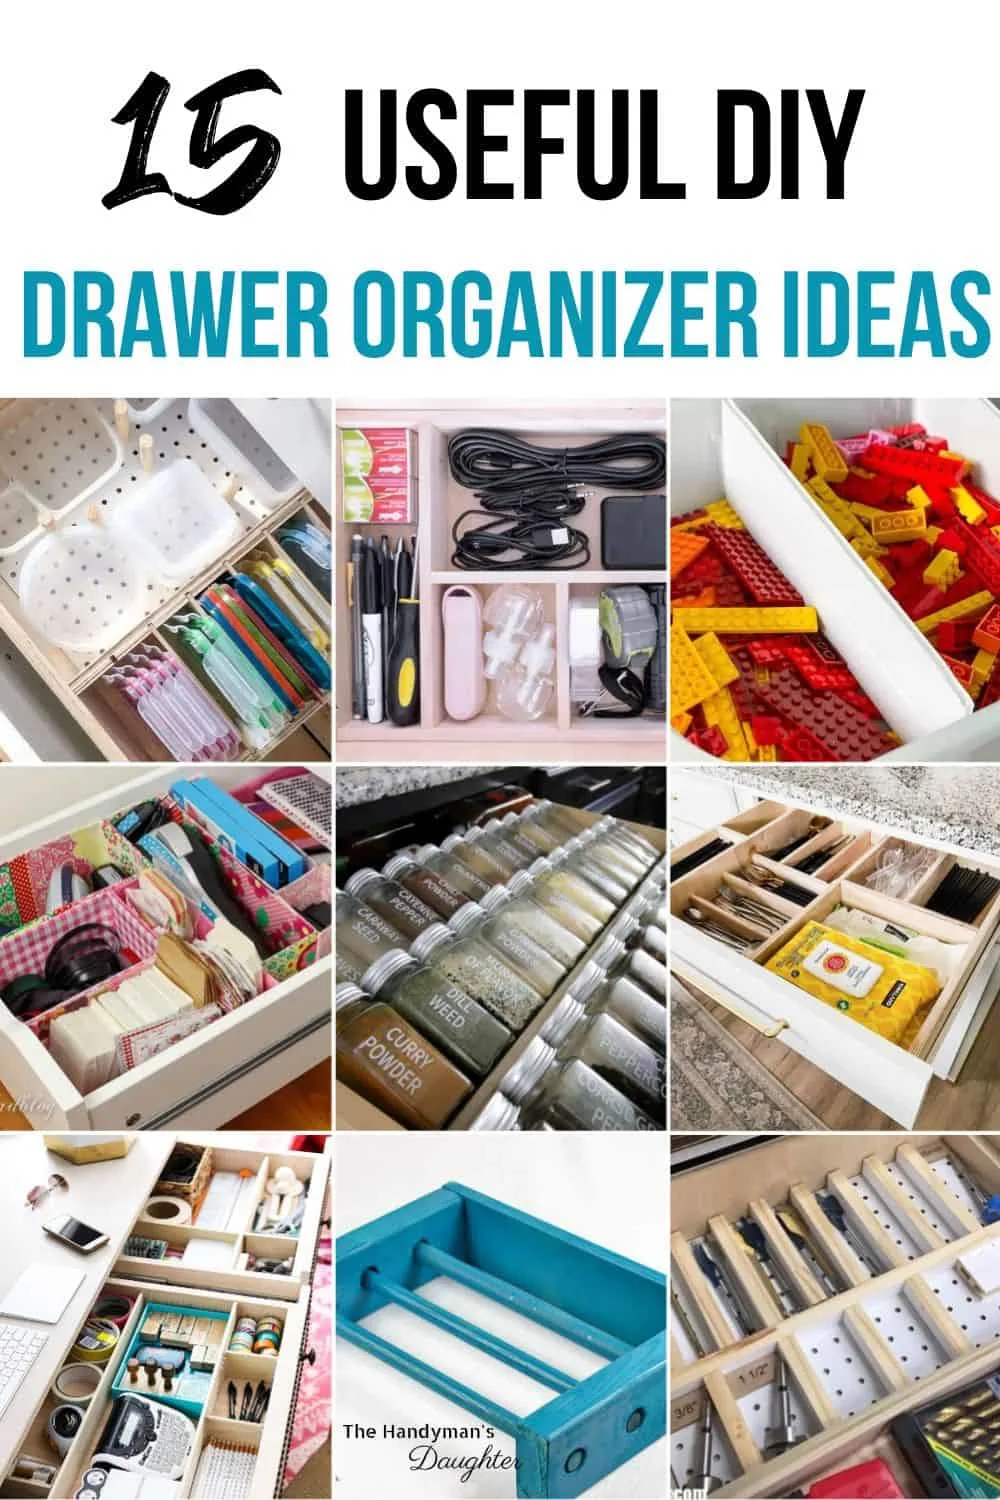 Custom-fit Drawer Organizers